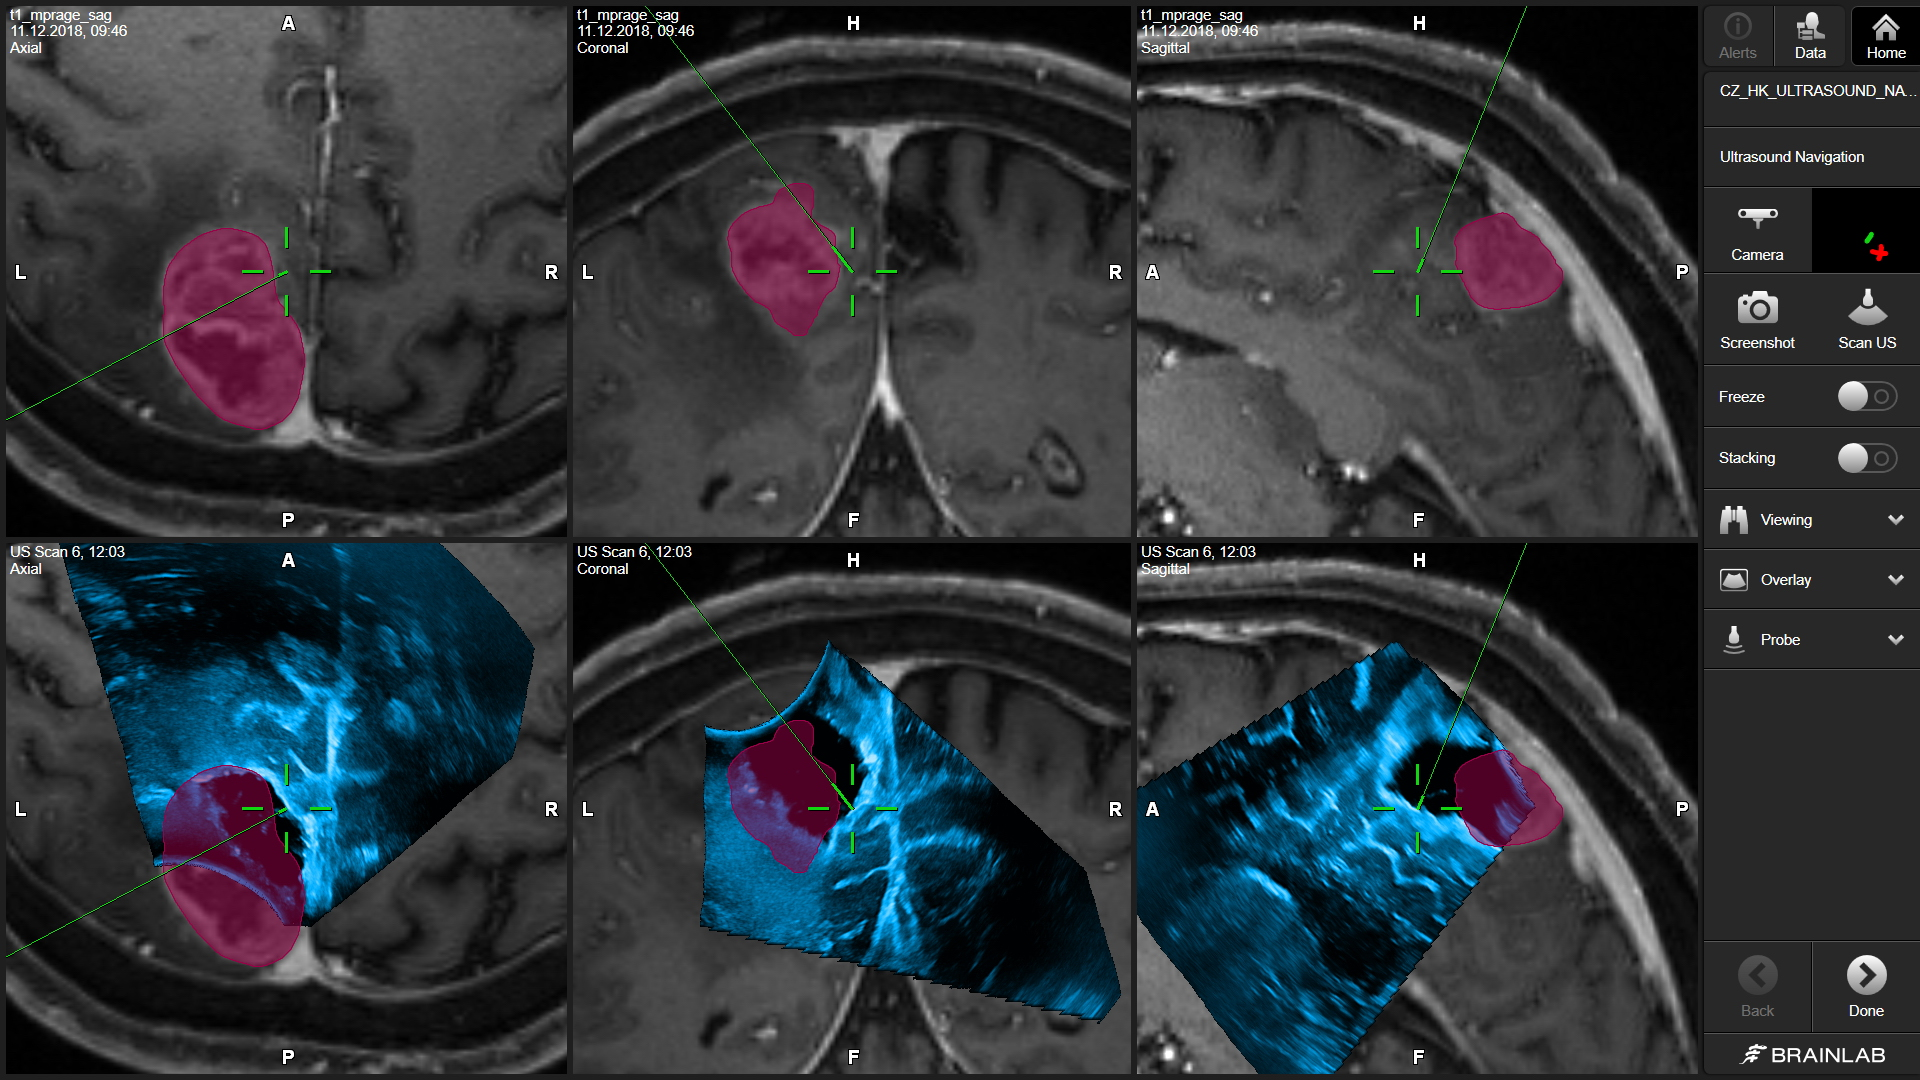 Ultrasound Navigation Software Screenshot: Preplanned tumor outline on MR image with 3D ultrasound scan in Navigation view